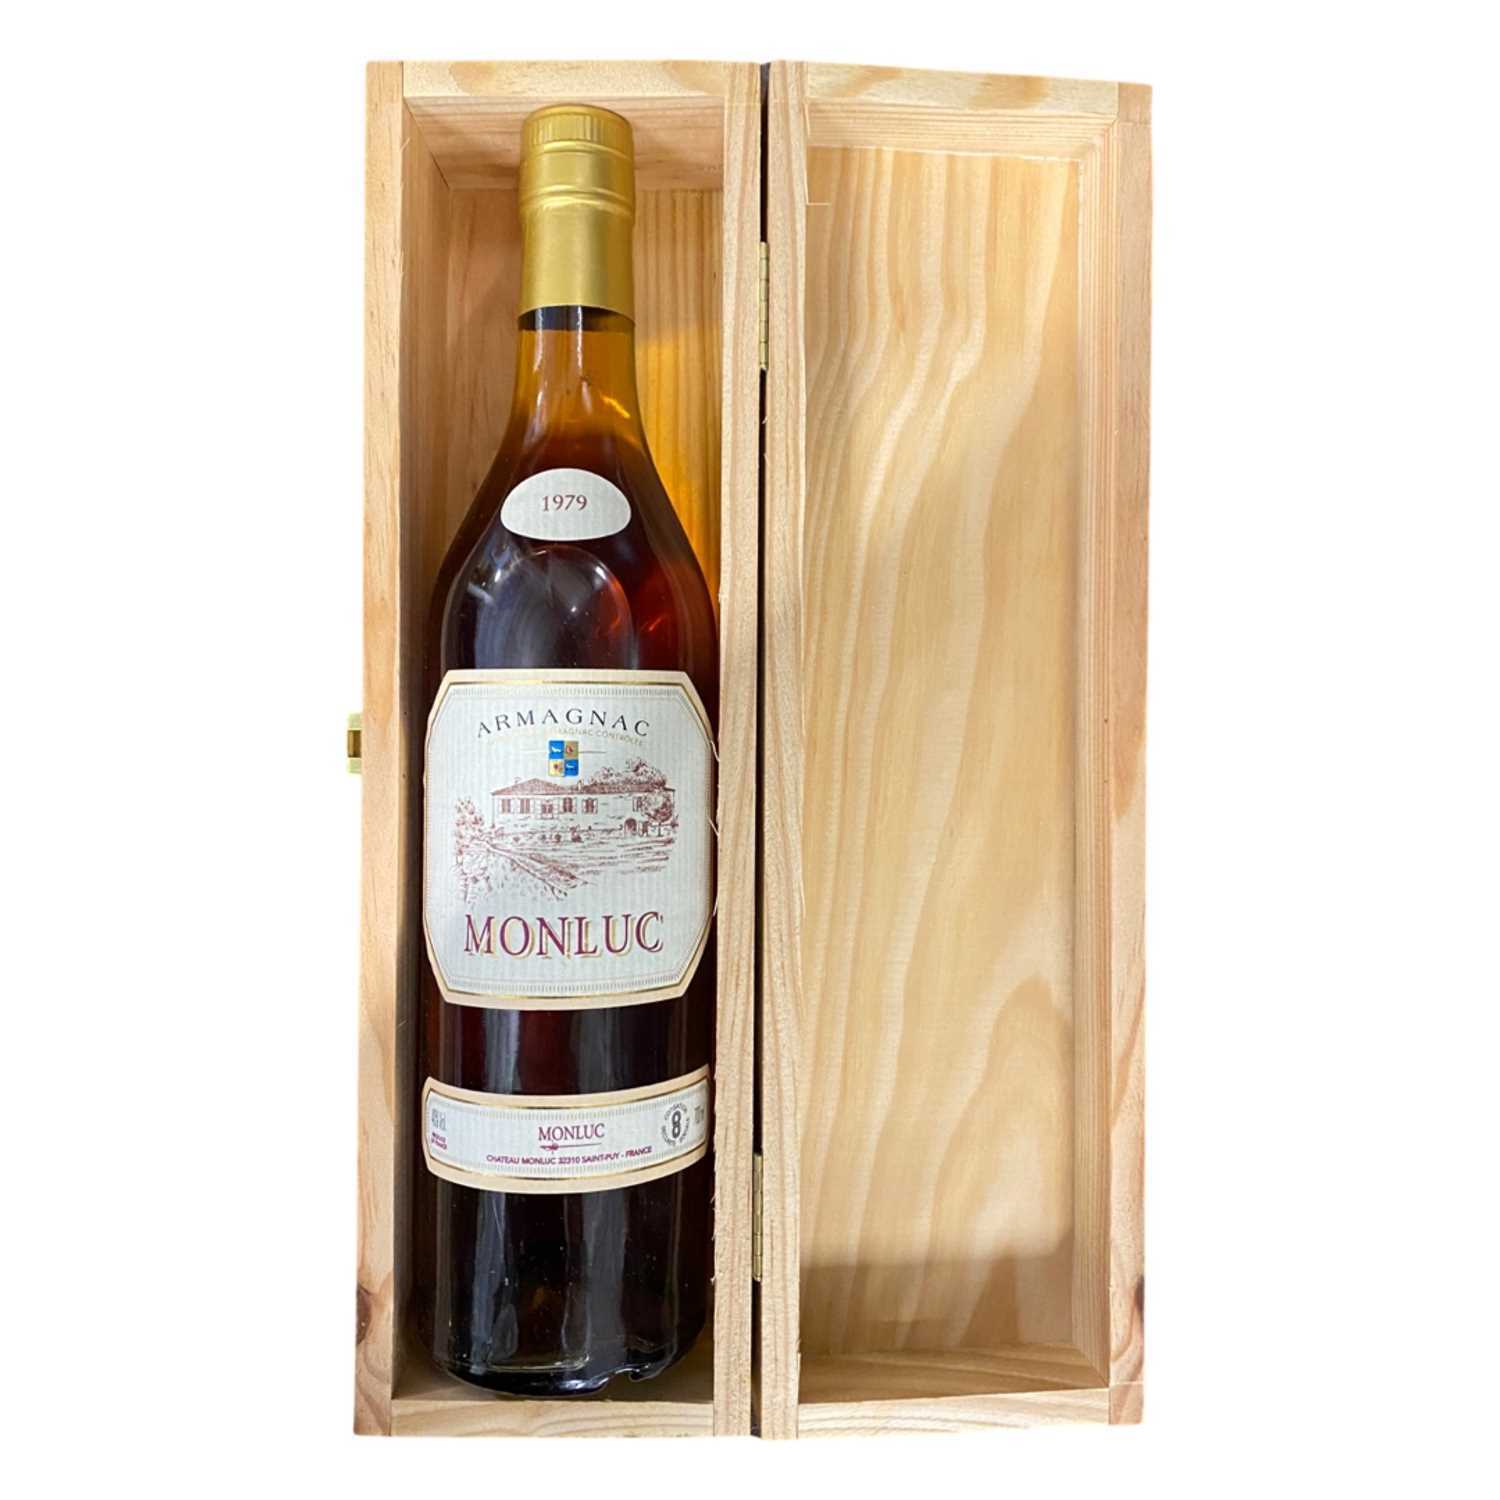 Cased Bottle of 1979 Armagnac Monluc 700ml, 40% vol - Image 2 of 2